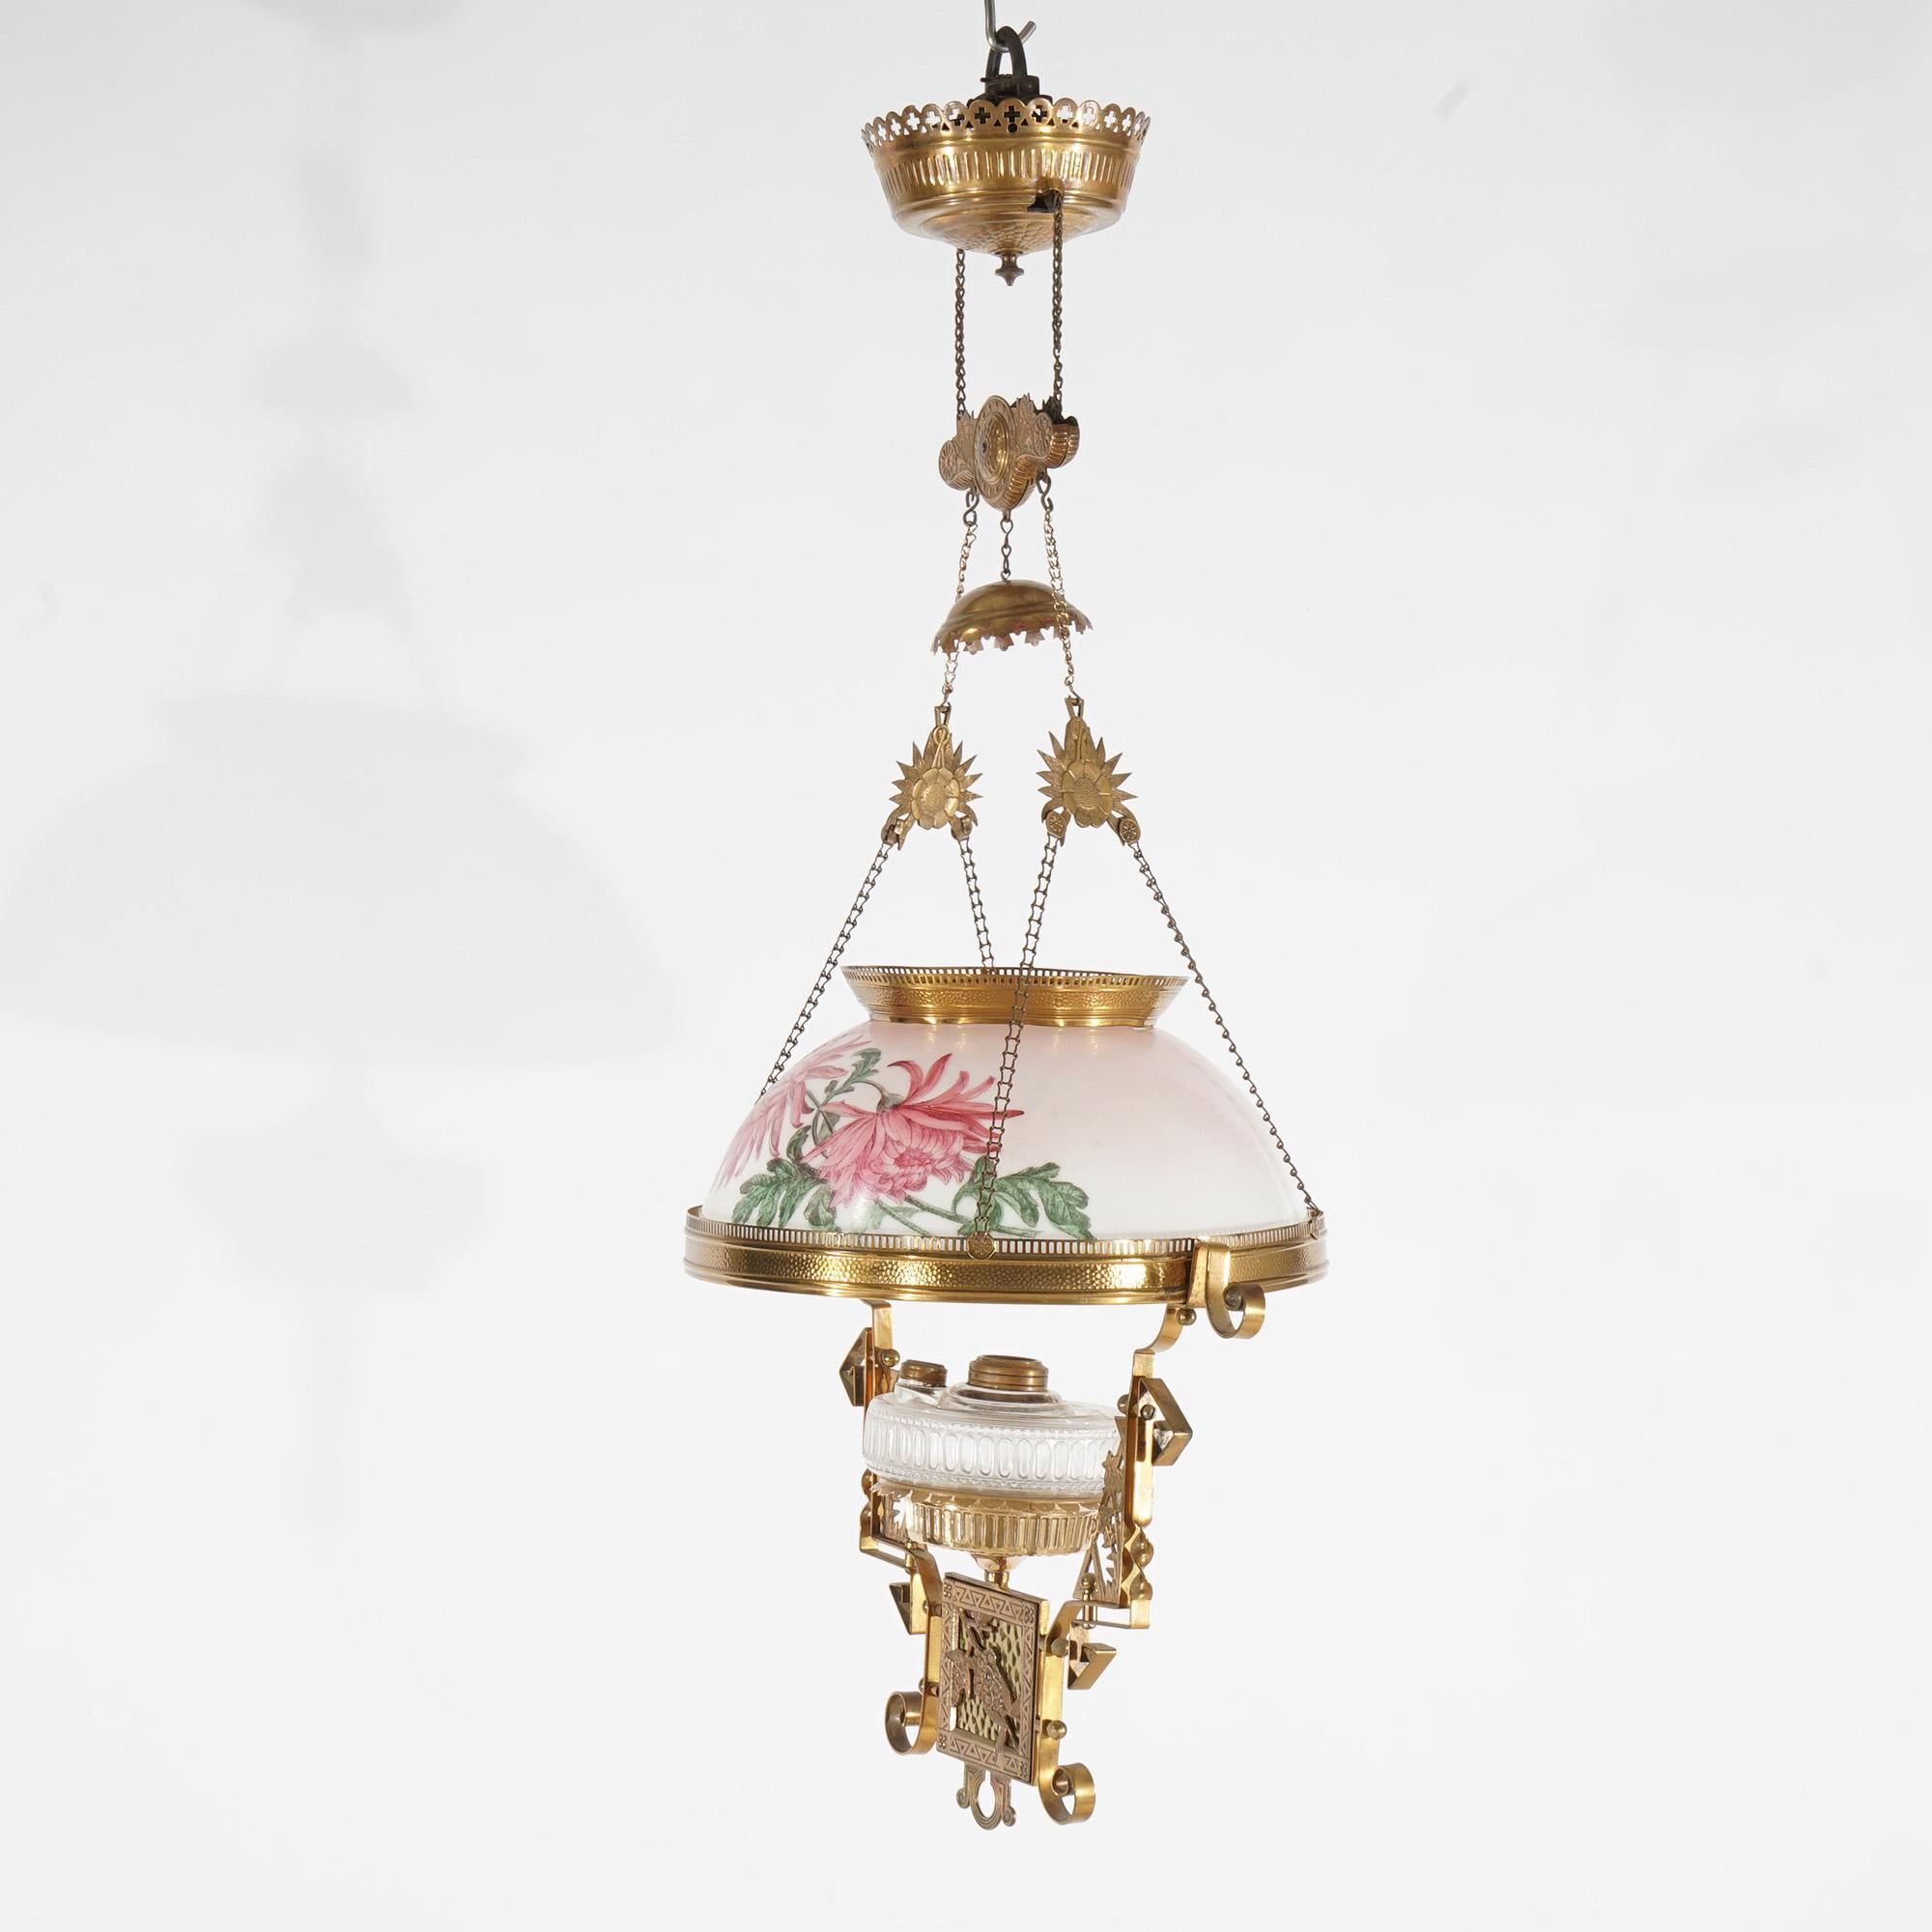 Antique Aesthetic Movement Hand Painted Hanging Kerosene Lamp C1890 For Sale 3